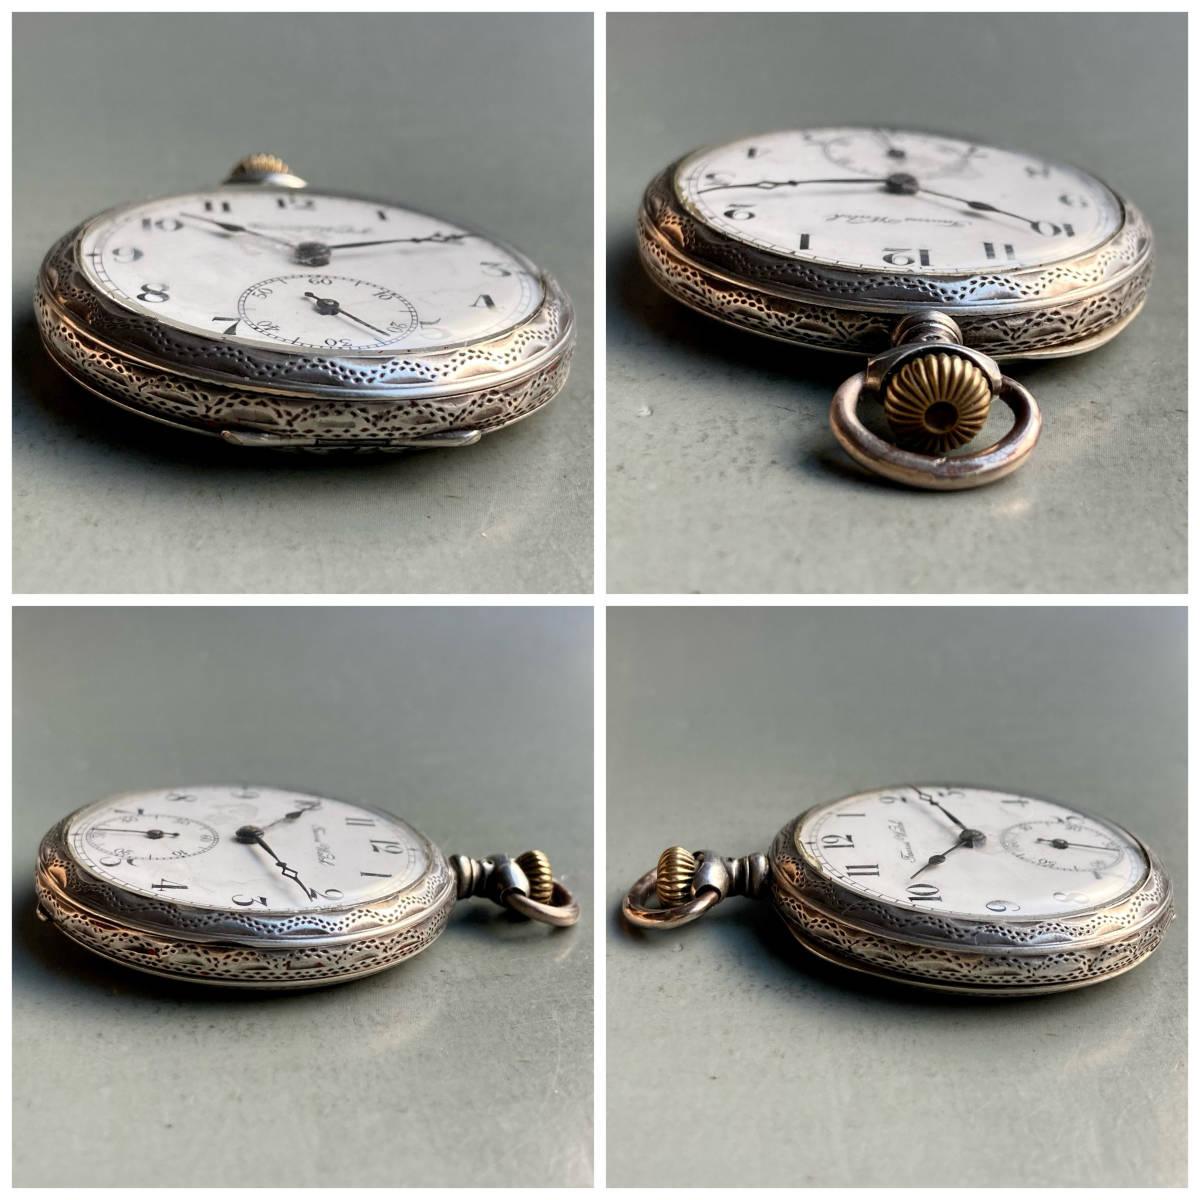 Taurus Pocket Watch Antique Manual 43mm Vintage Pocket Watch German Silver - Murphy Johnson Watches Co.